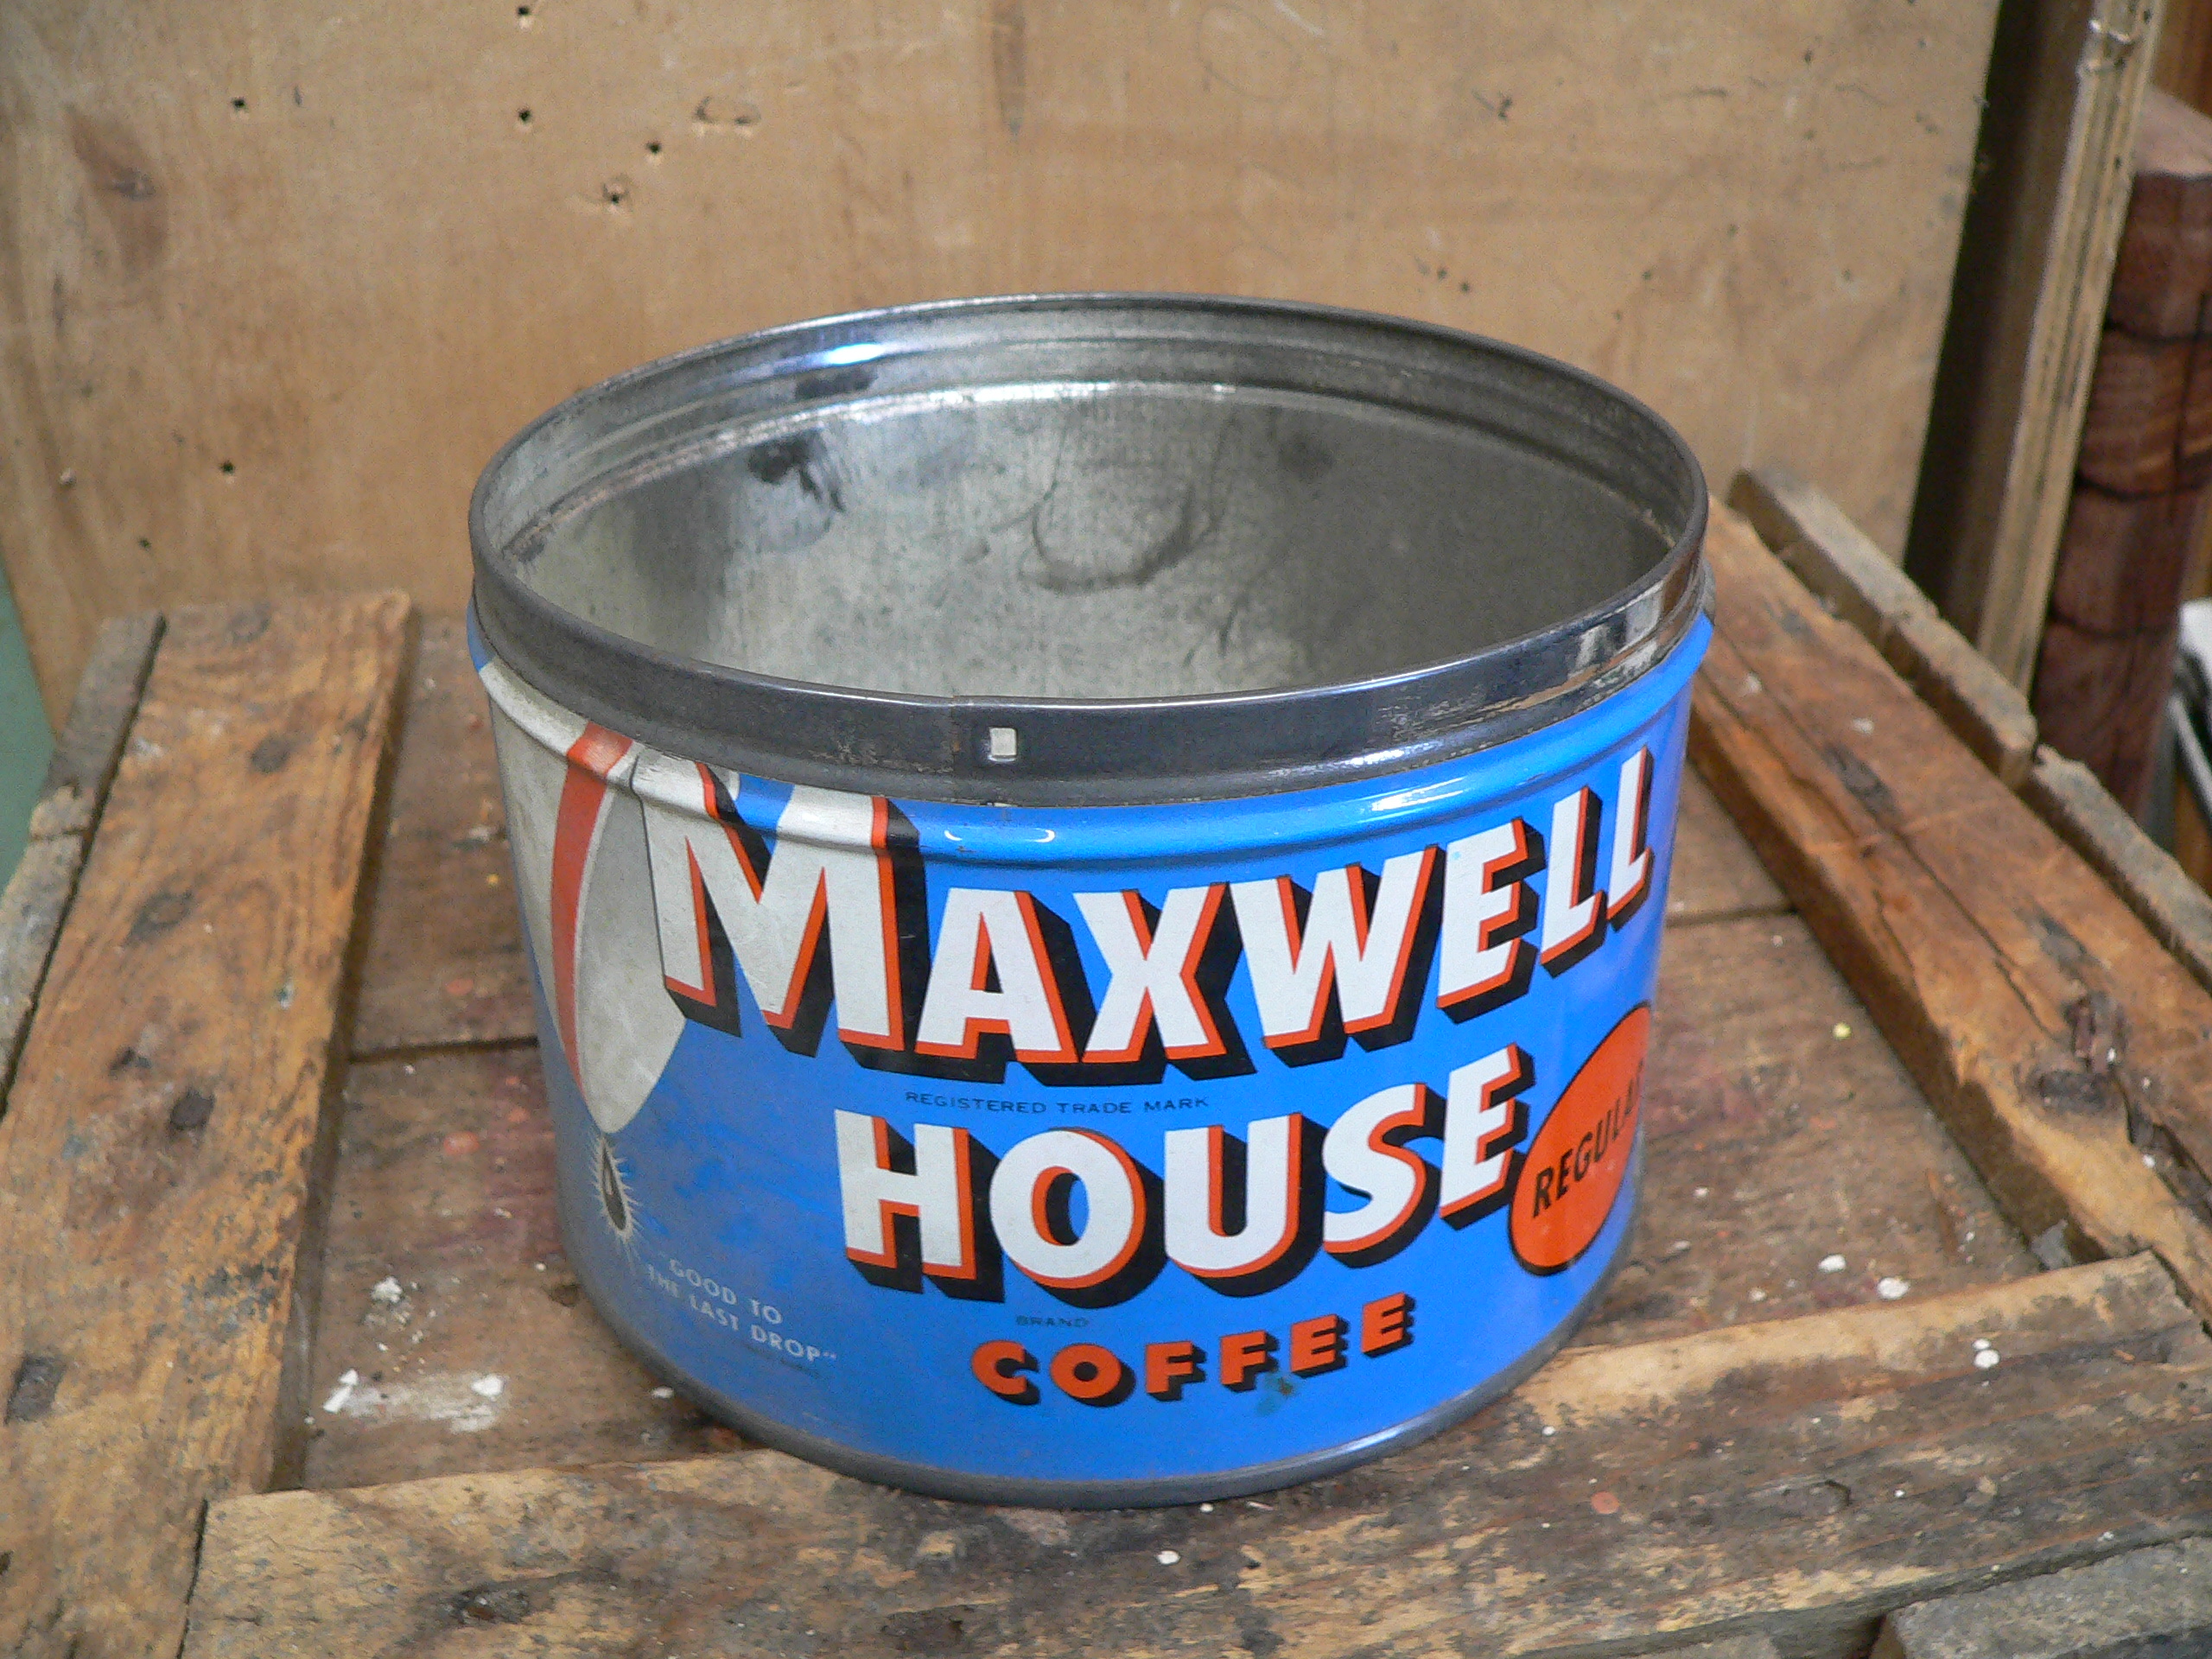 Canne de café maxwell house # 5936.3